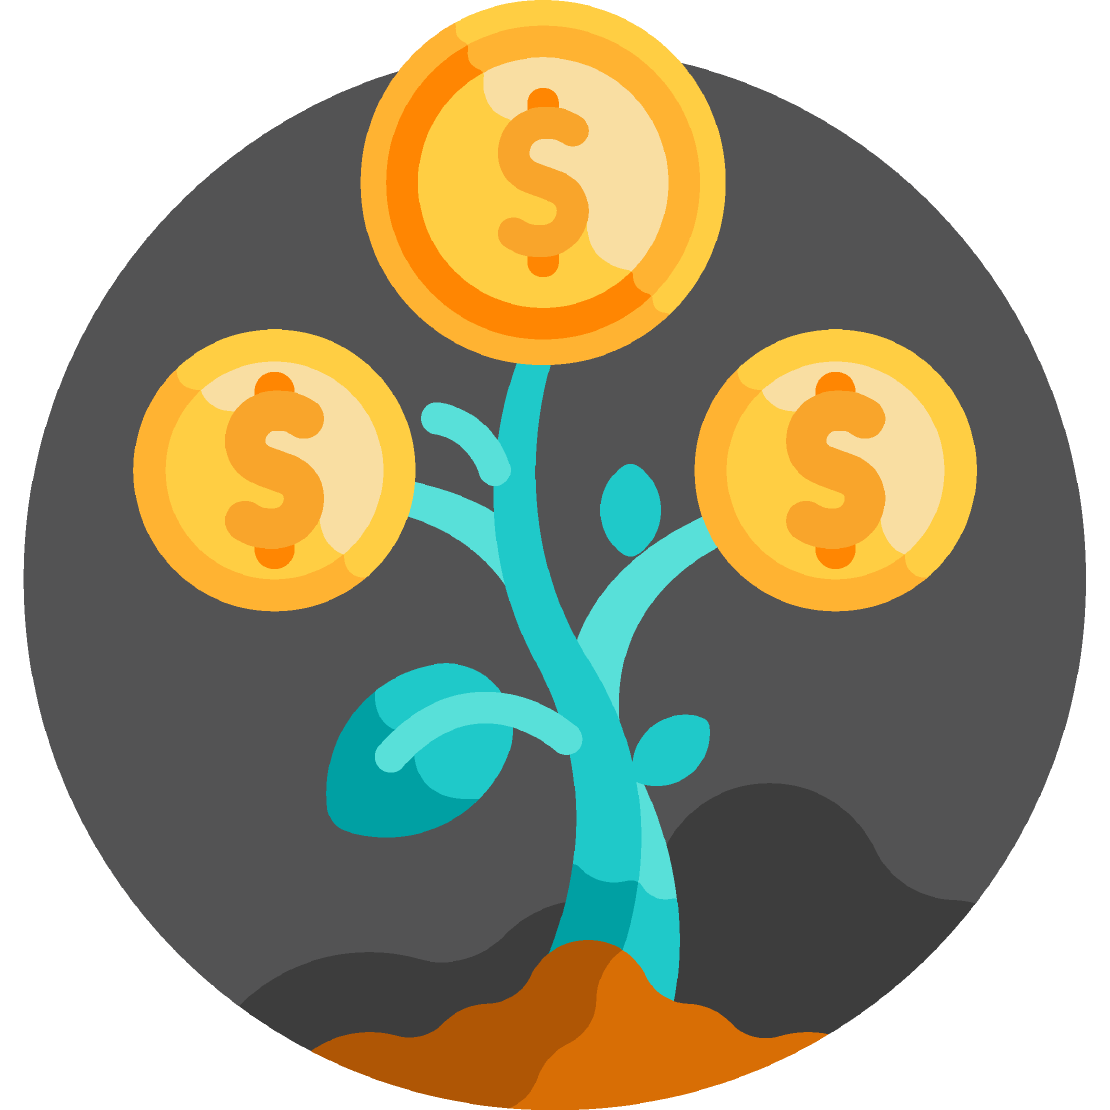 Money plant starting to grow icon